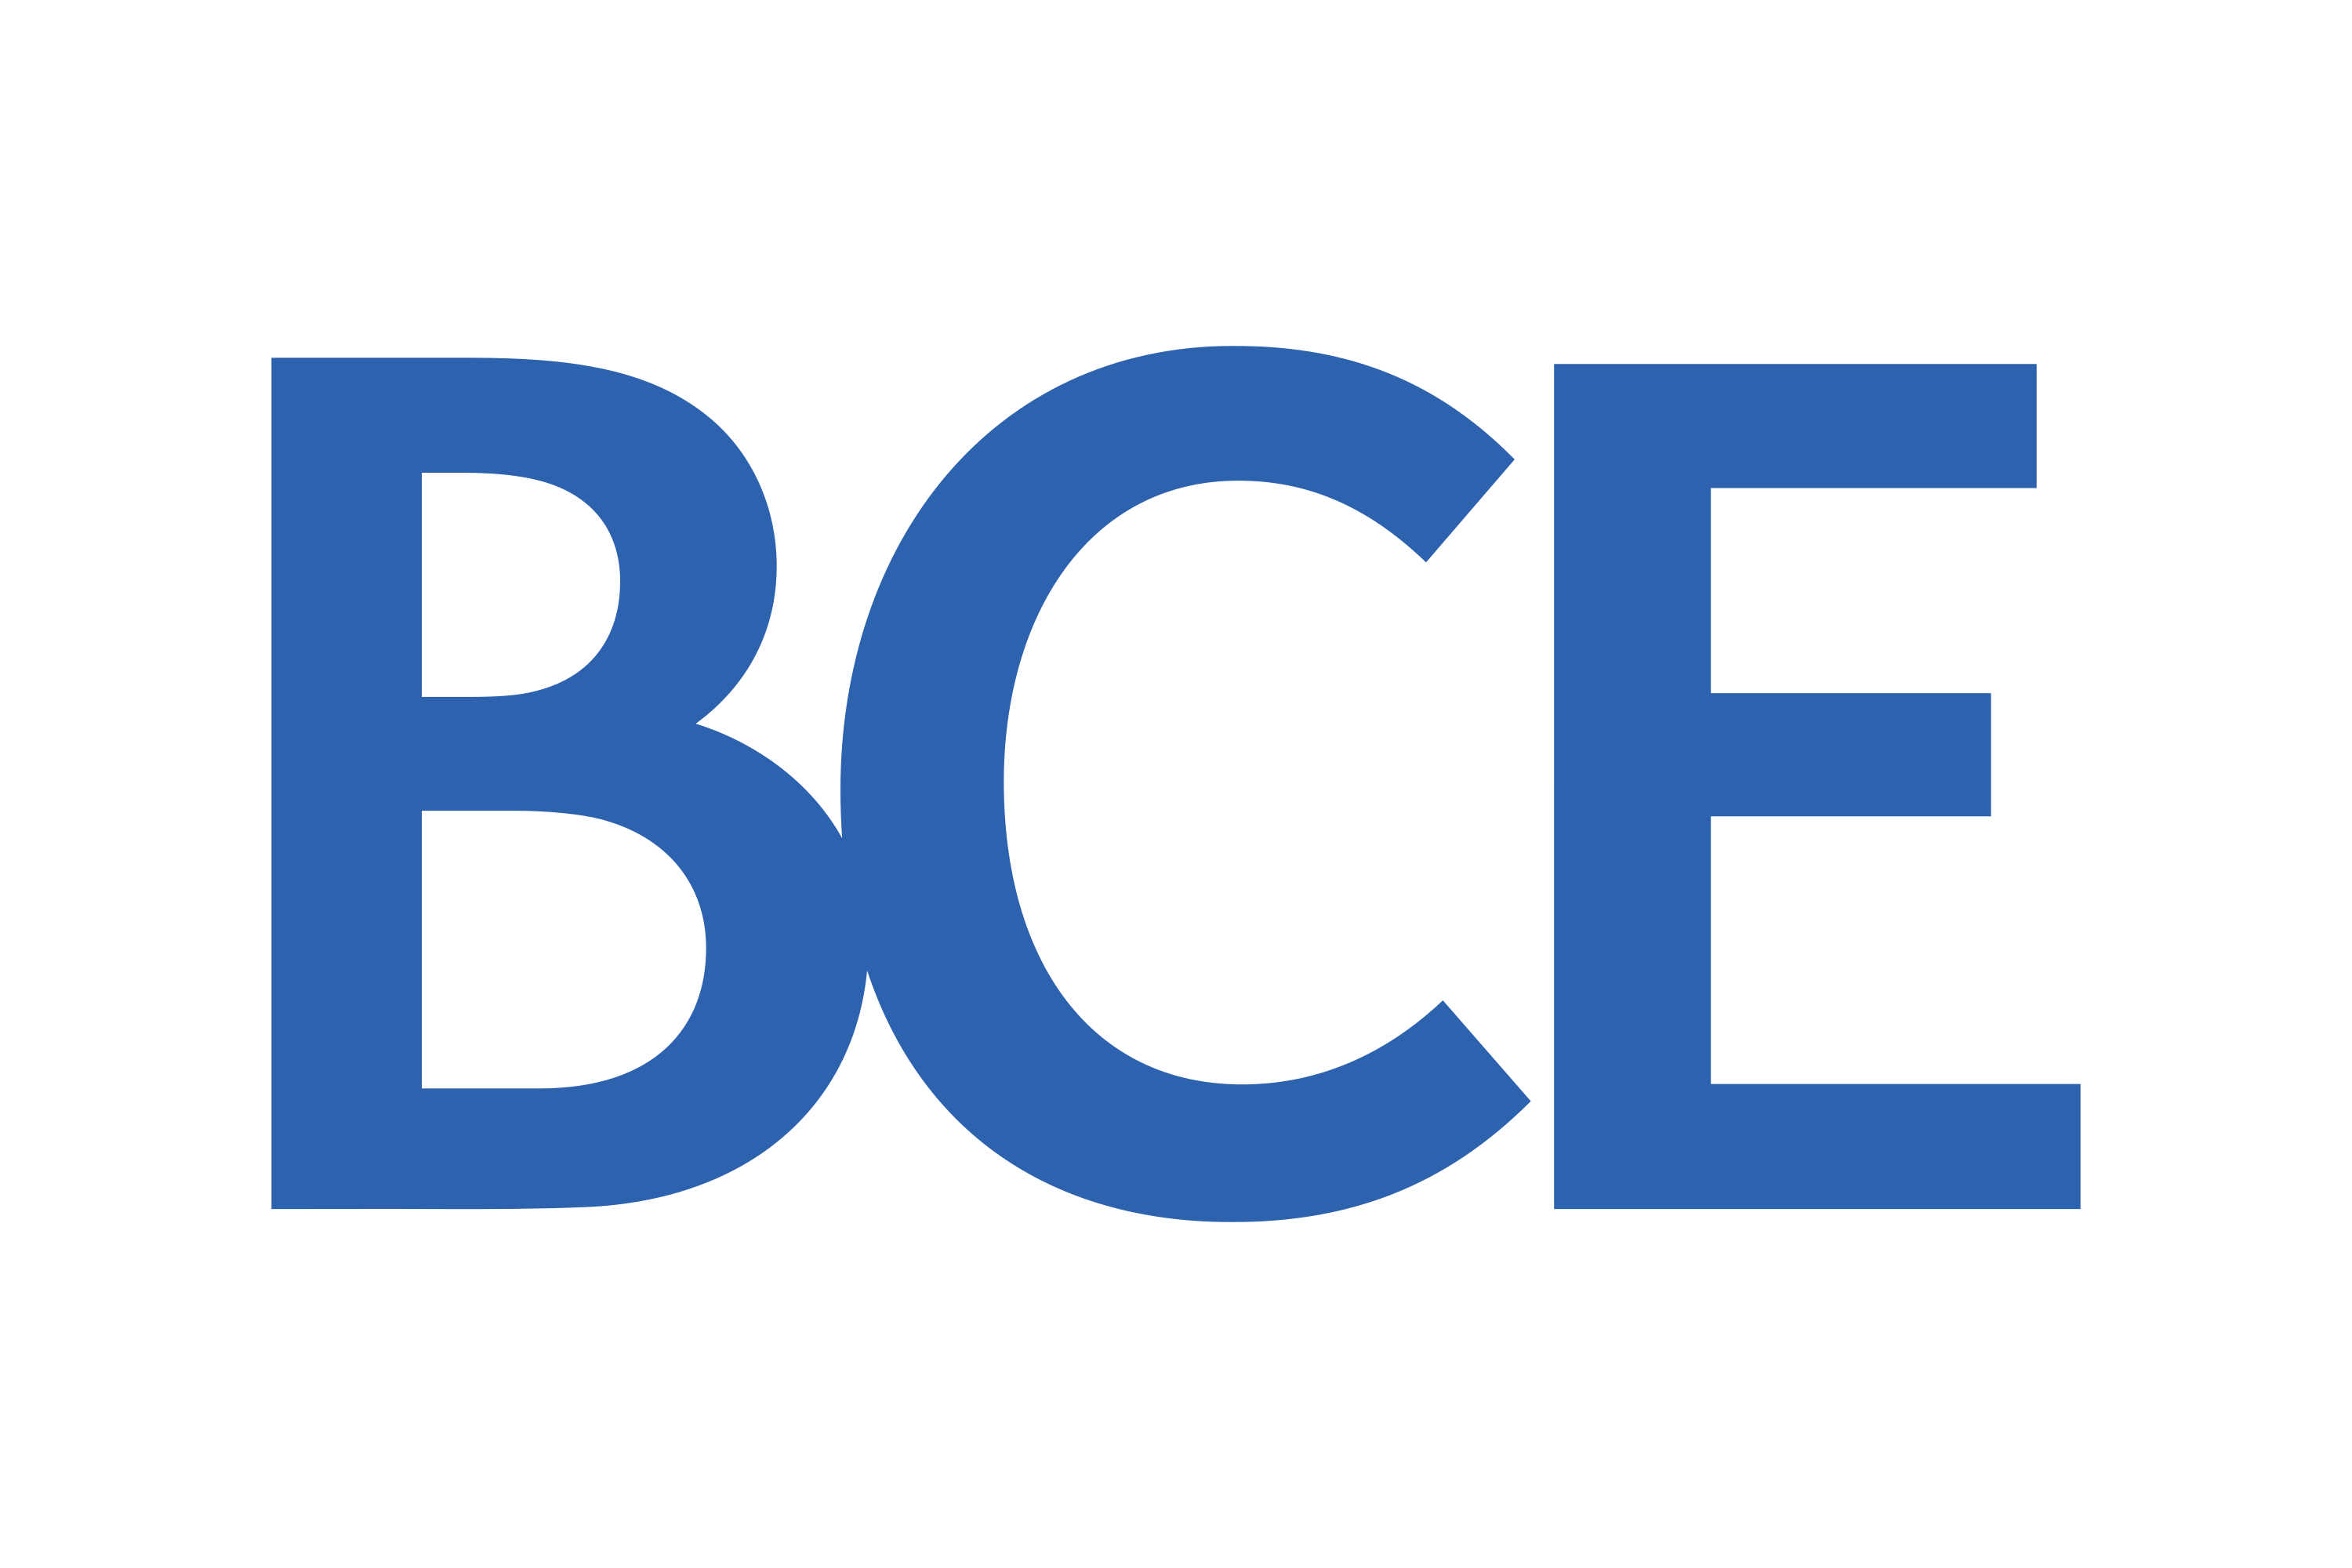 Download BCE Inc. (Bell Canada Enterprises Inc.) Logo in SVG Vector or